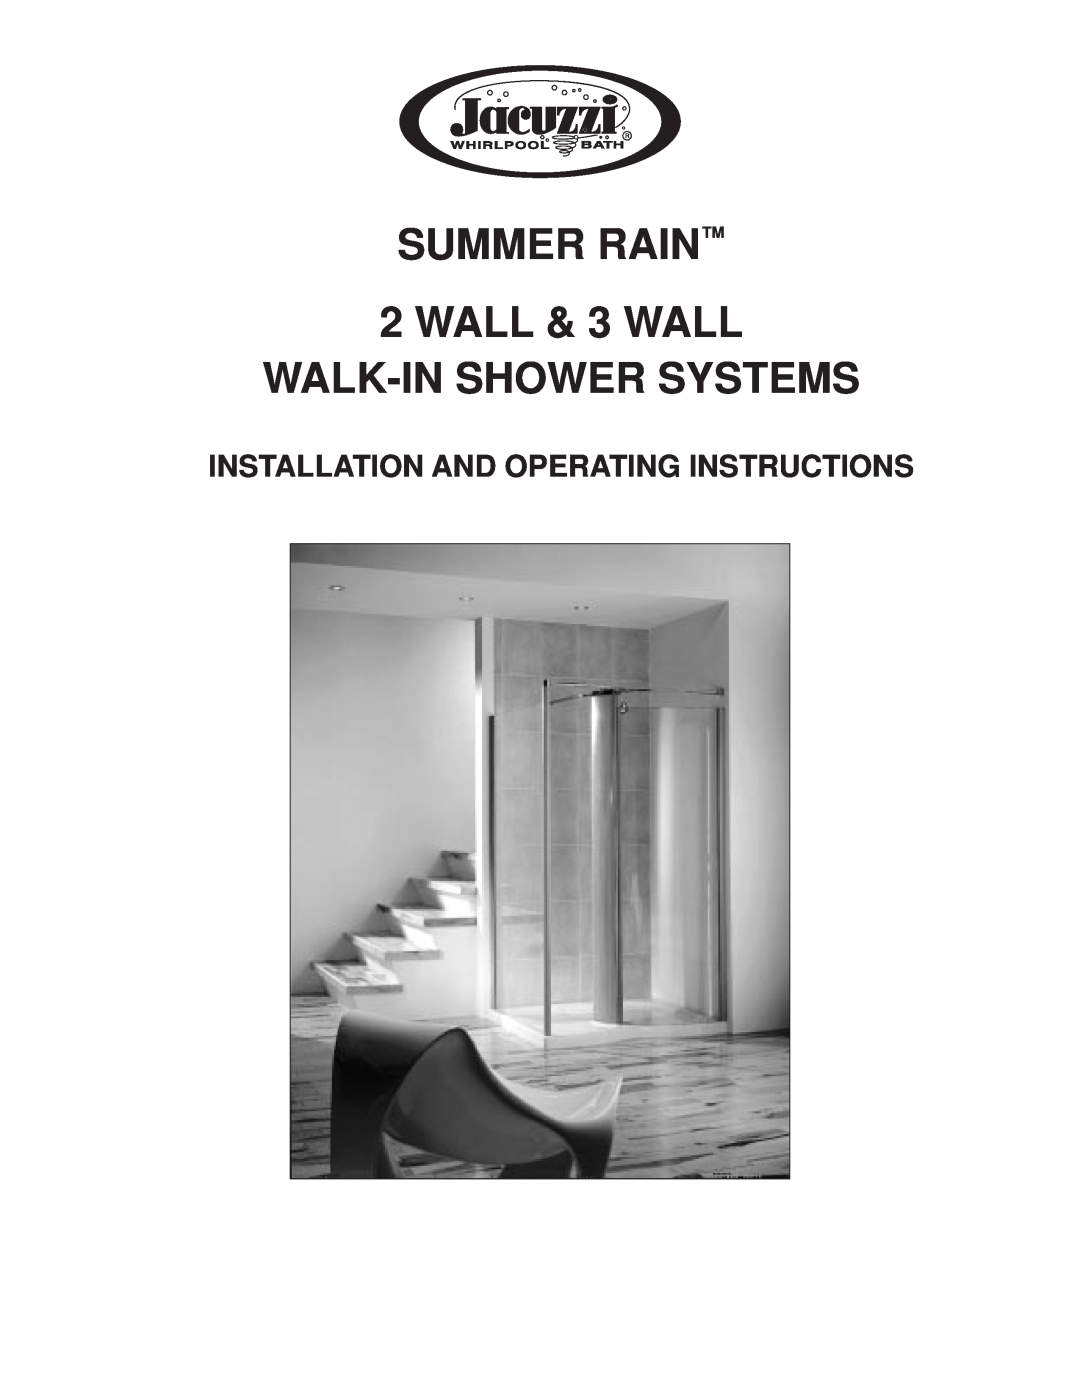 Jacuzzi SUMMER RAINTM 2 WALL & 3 WALL WALK-IN SHOWER SYSTEMS manual SUMMER RAIN 2 WALL & 3 WALL WALK-IN SHOWER SYSTEMS 